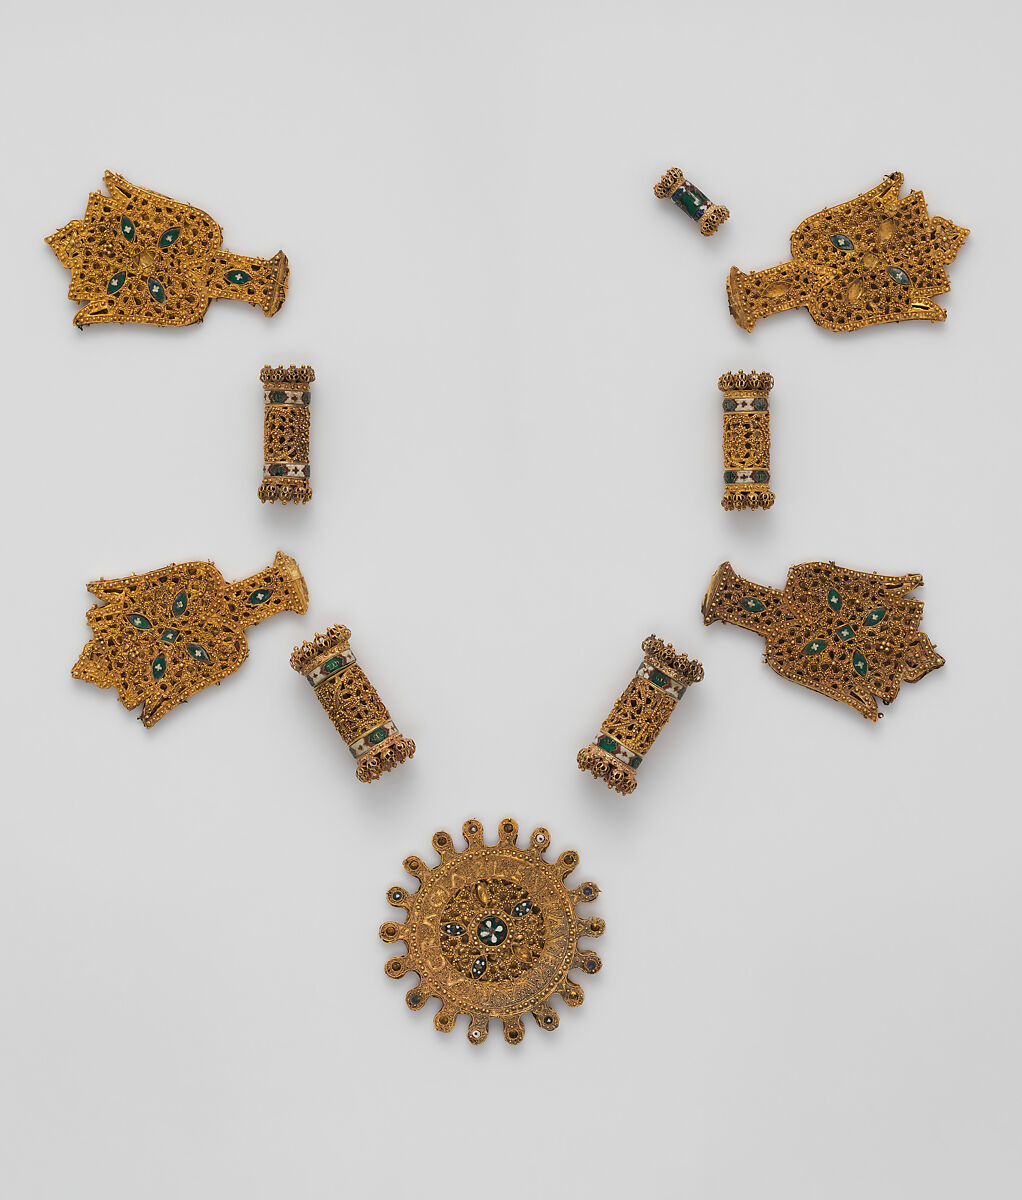 Elements from a Necklace, Gold, cloisonnè enamel, Spanish 